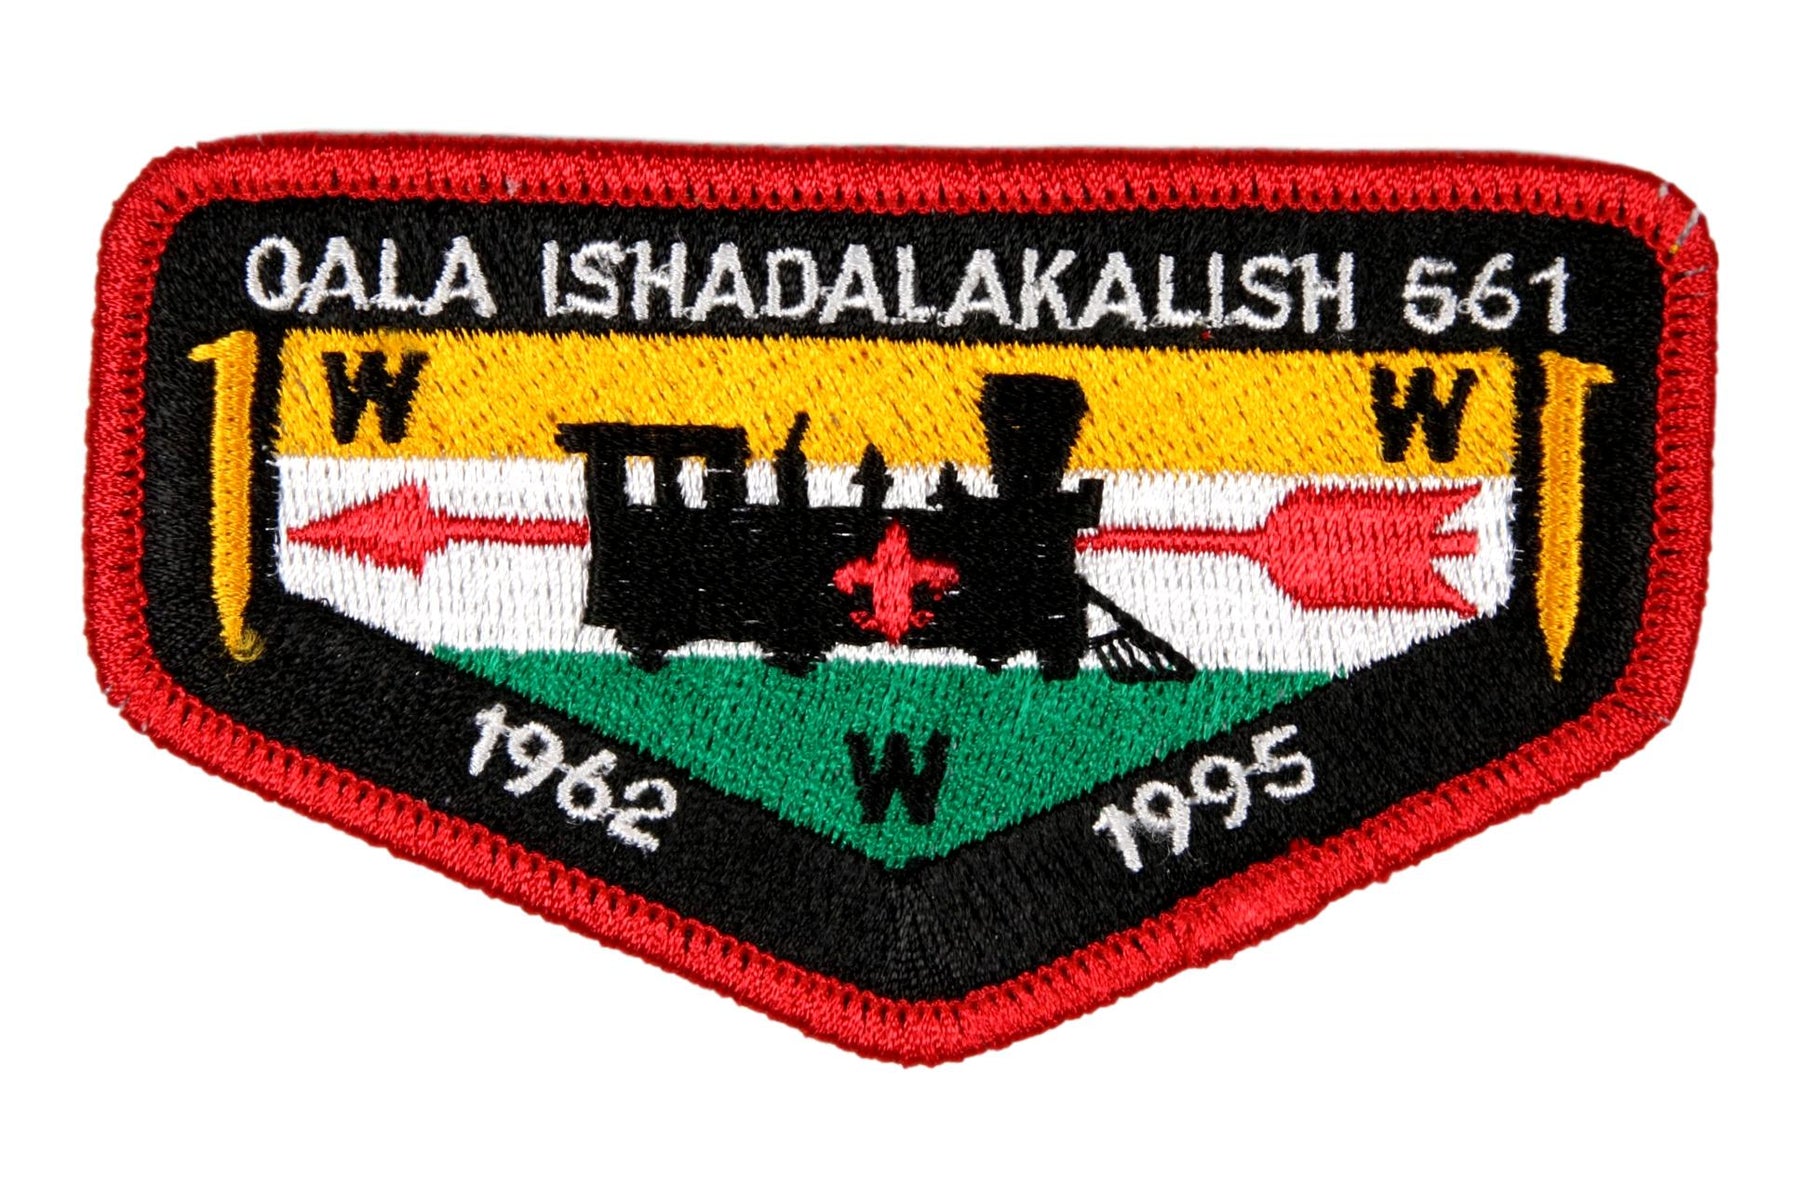 Lodge 561 Oala Ishadalakalish Flap S-29